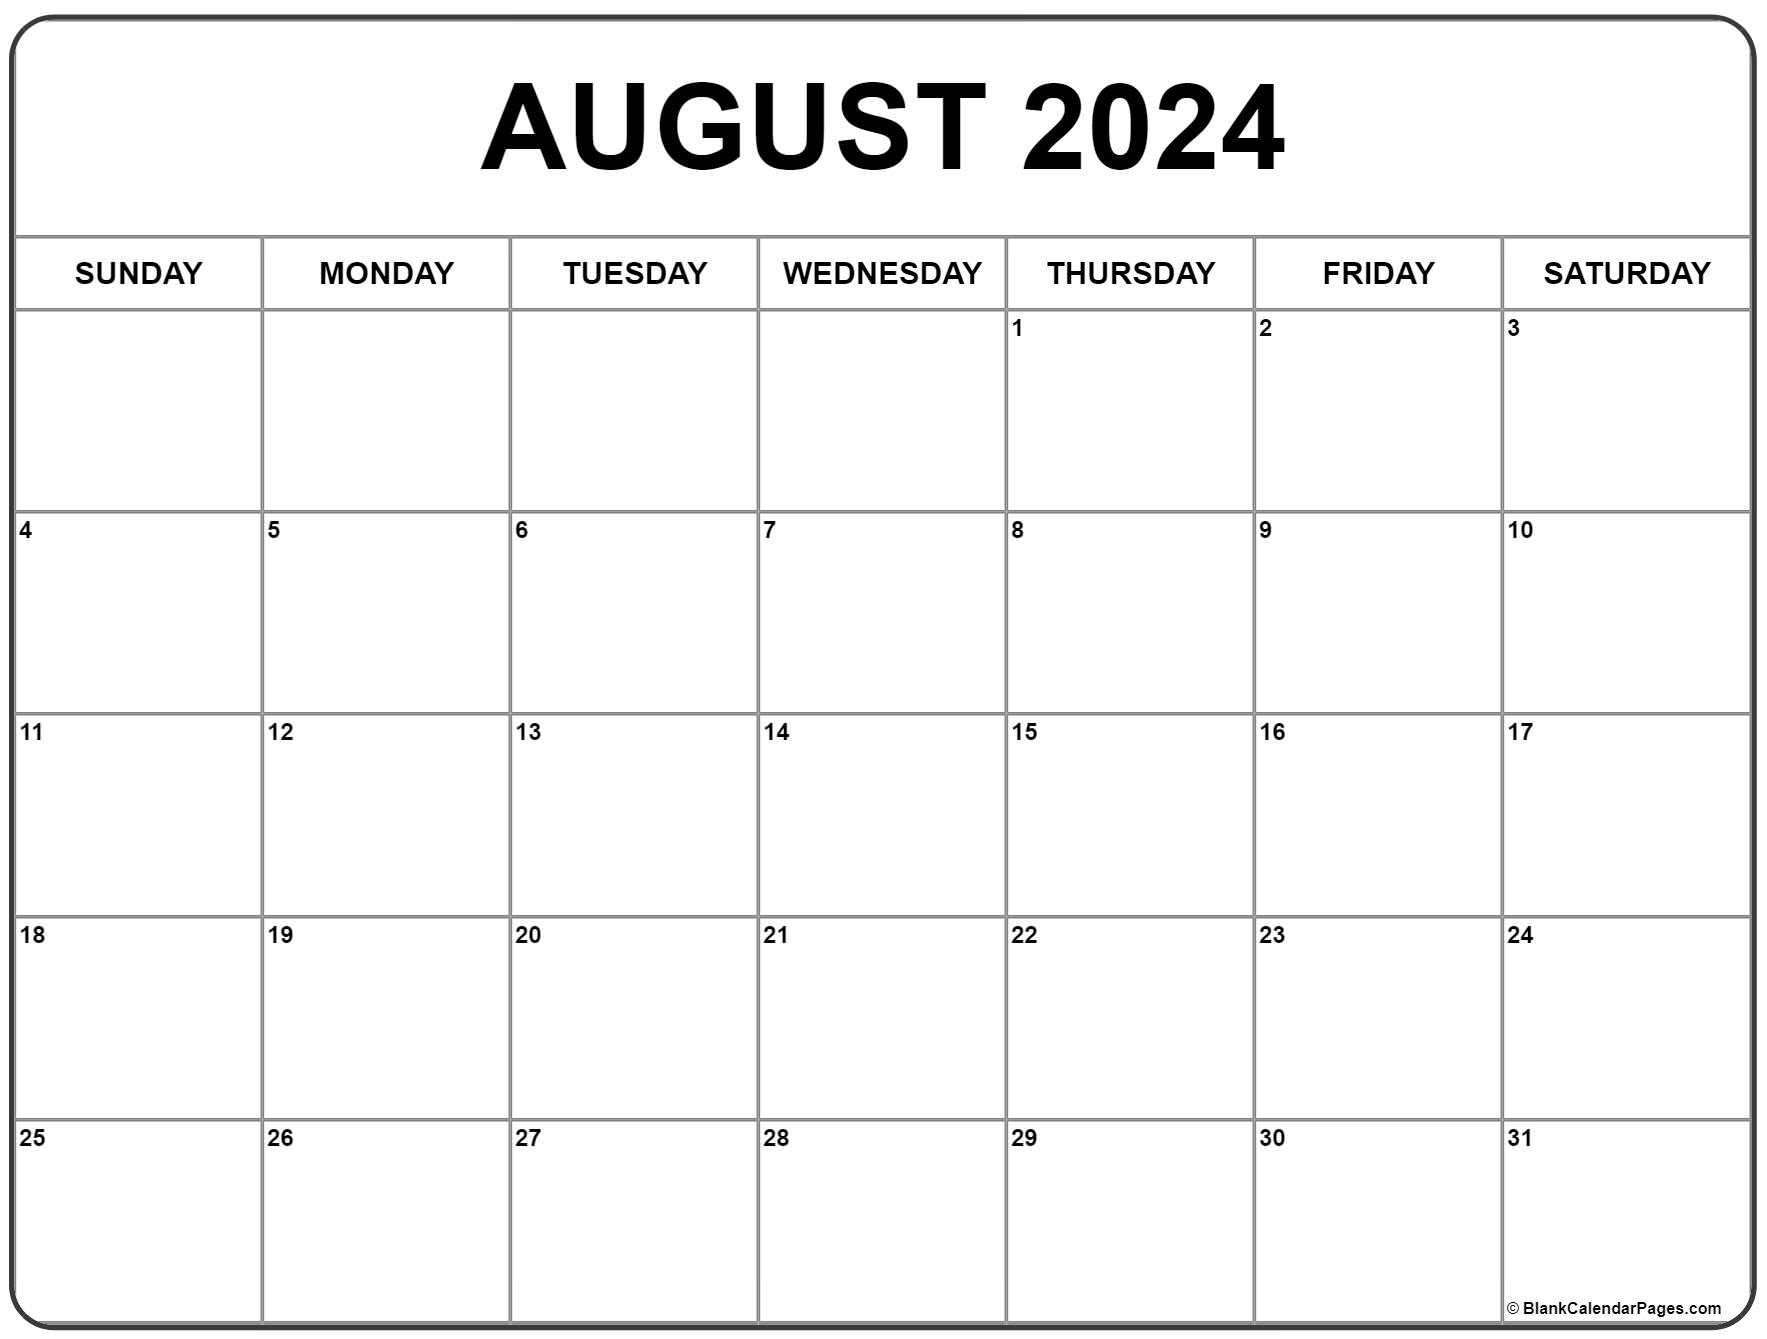 August 2024 Calendar | Free Printable Calendar for 2024 August Calendar Printable